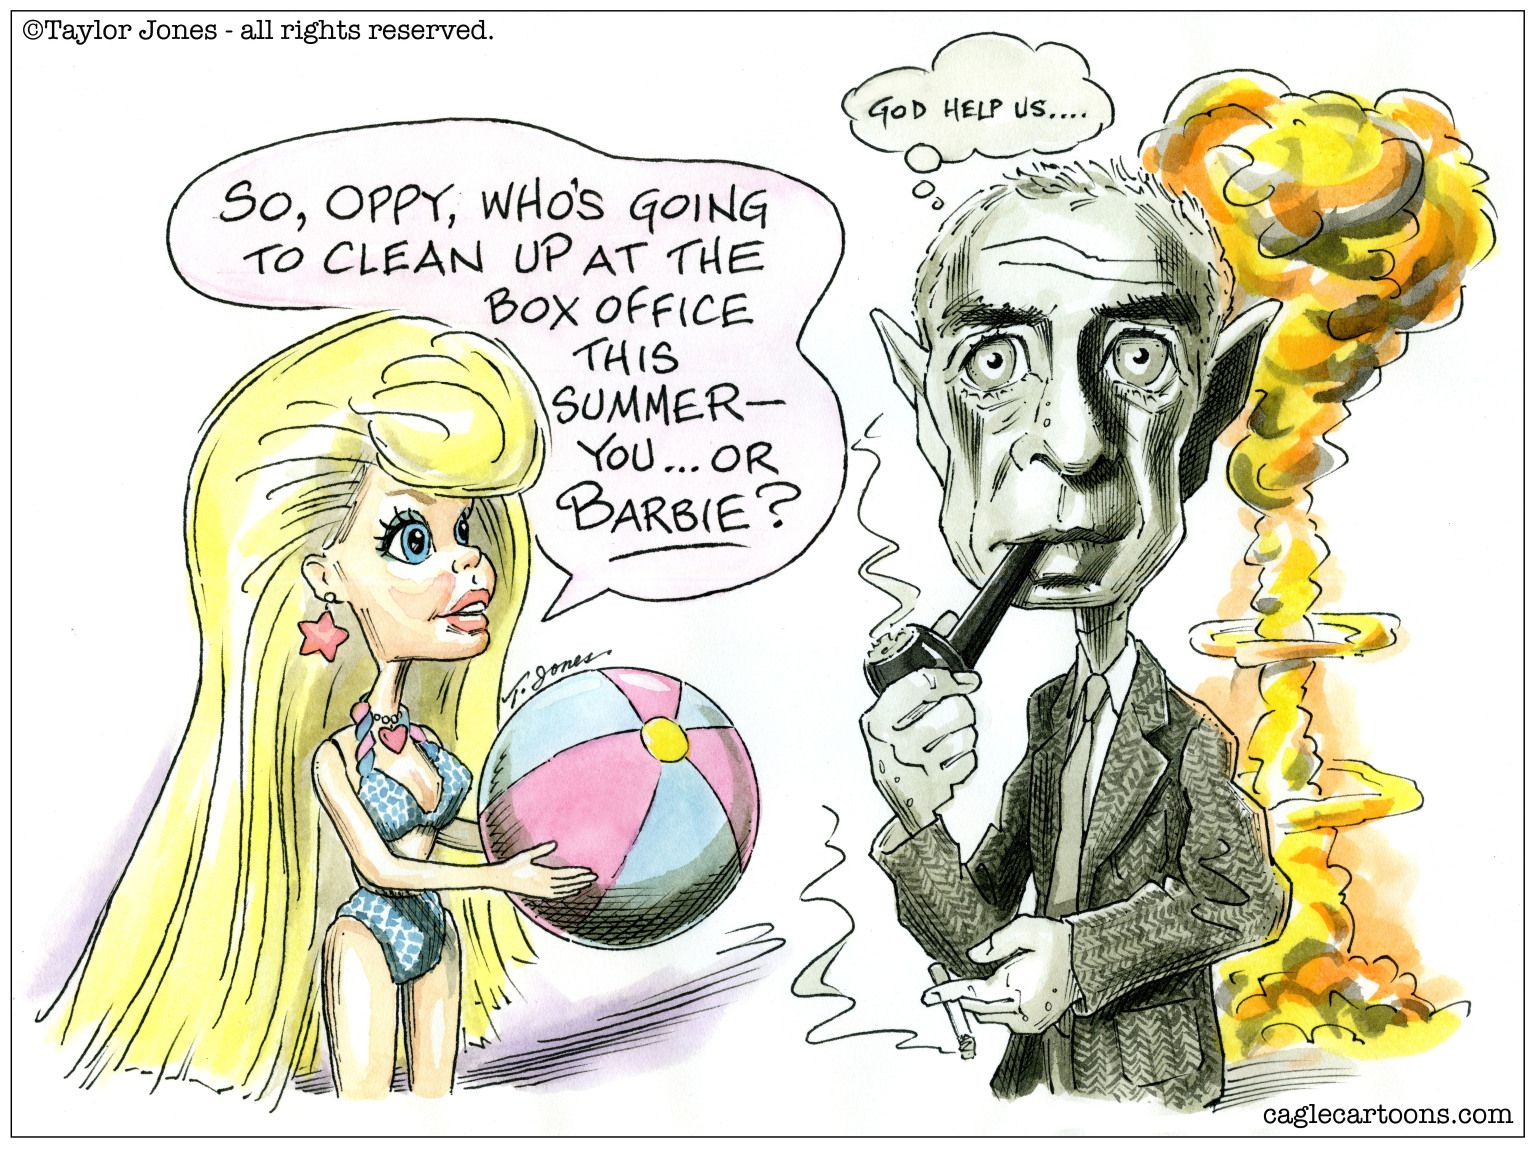 Barbie versus Oppenheimer - newsjustin.press - political cartoon